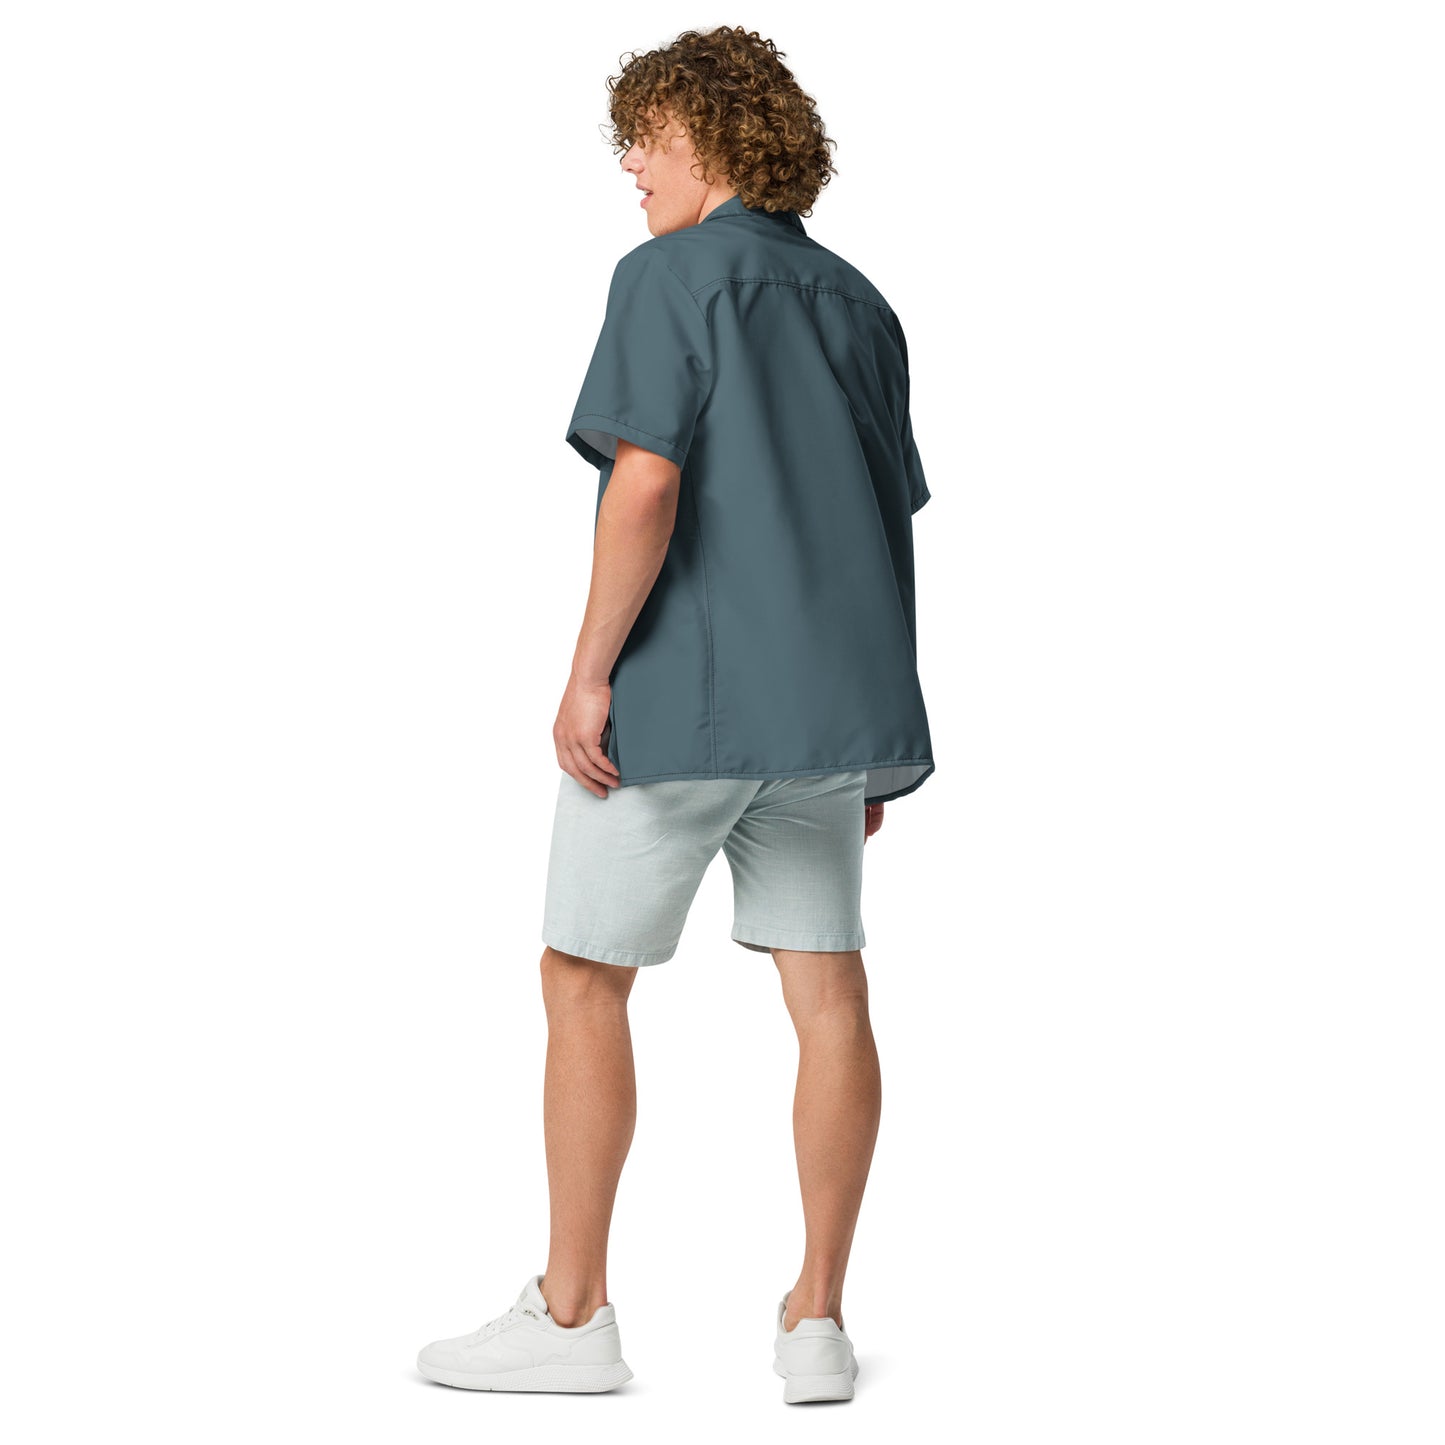 Storm Blue button shirt - Tropical Seas Clothing 